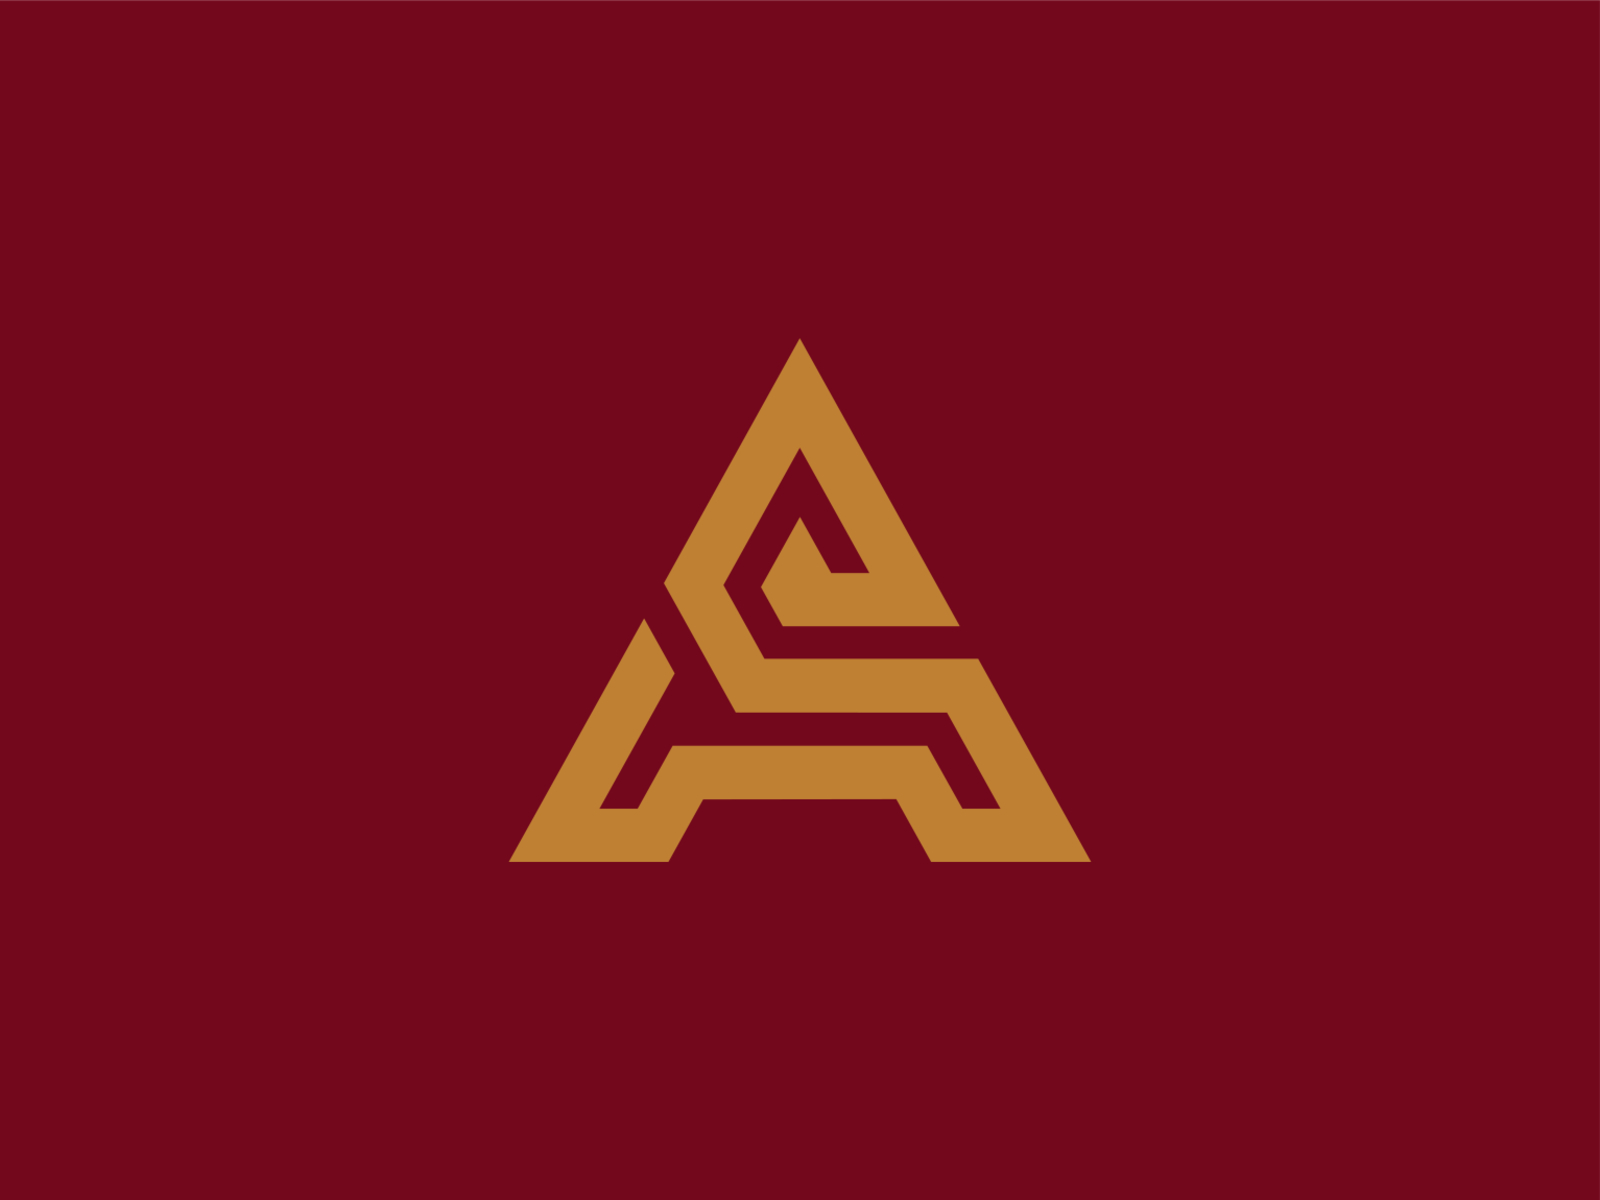 Personal Branding (A+S+H) - Branding & Logo Design by Reenusa on Dribbble